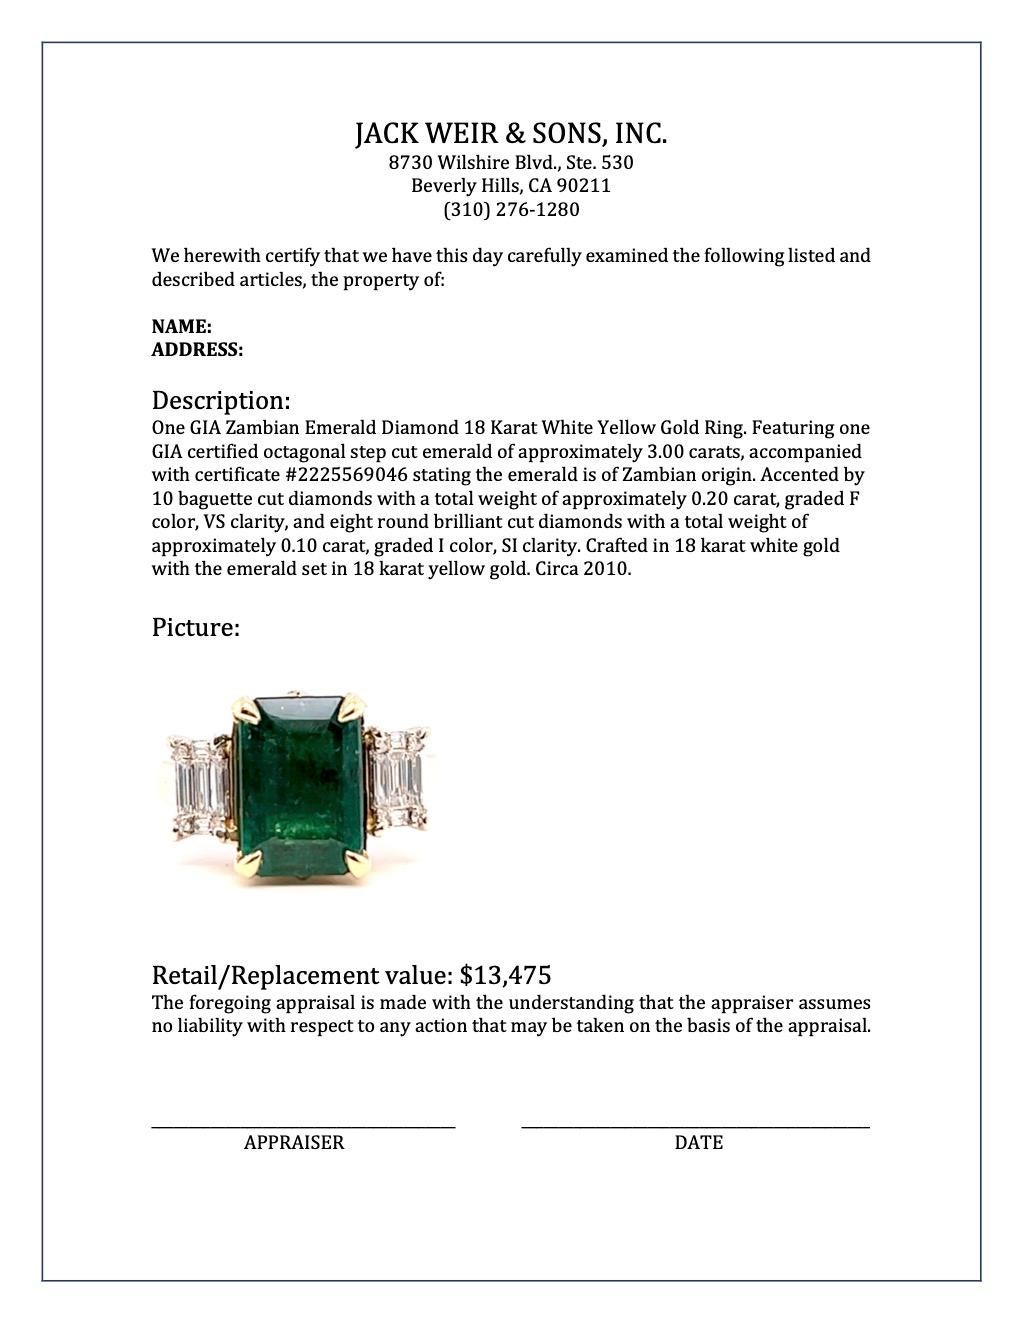 GIA Zambian Emerald Diamond 18 Karat White Yellow Gold Ring 3